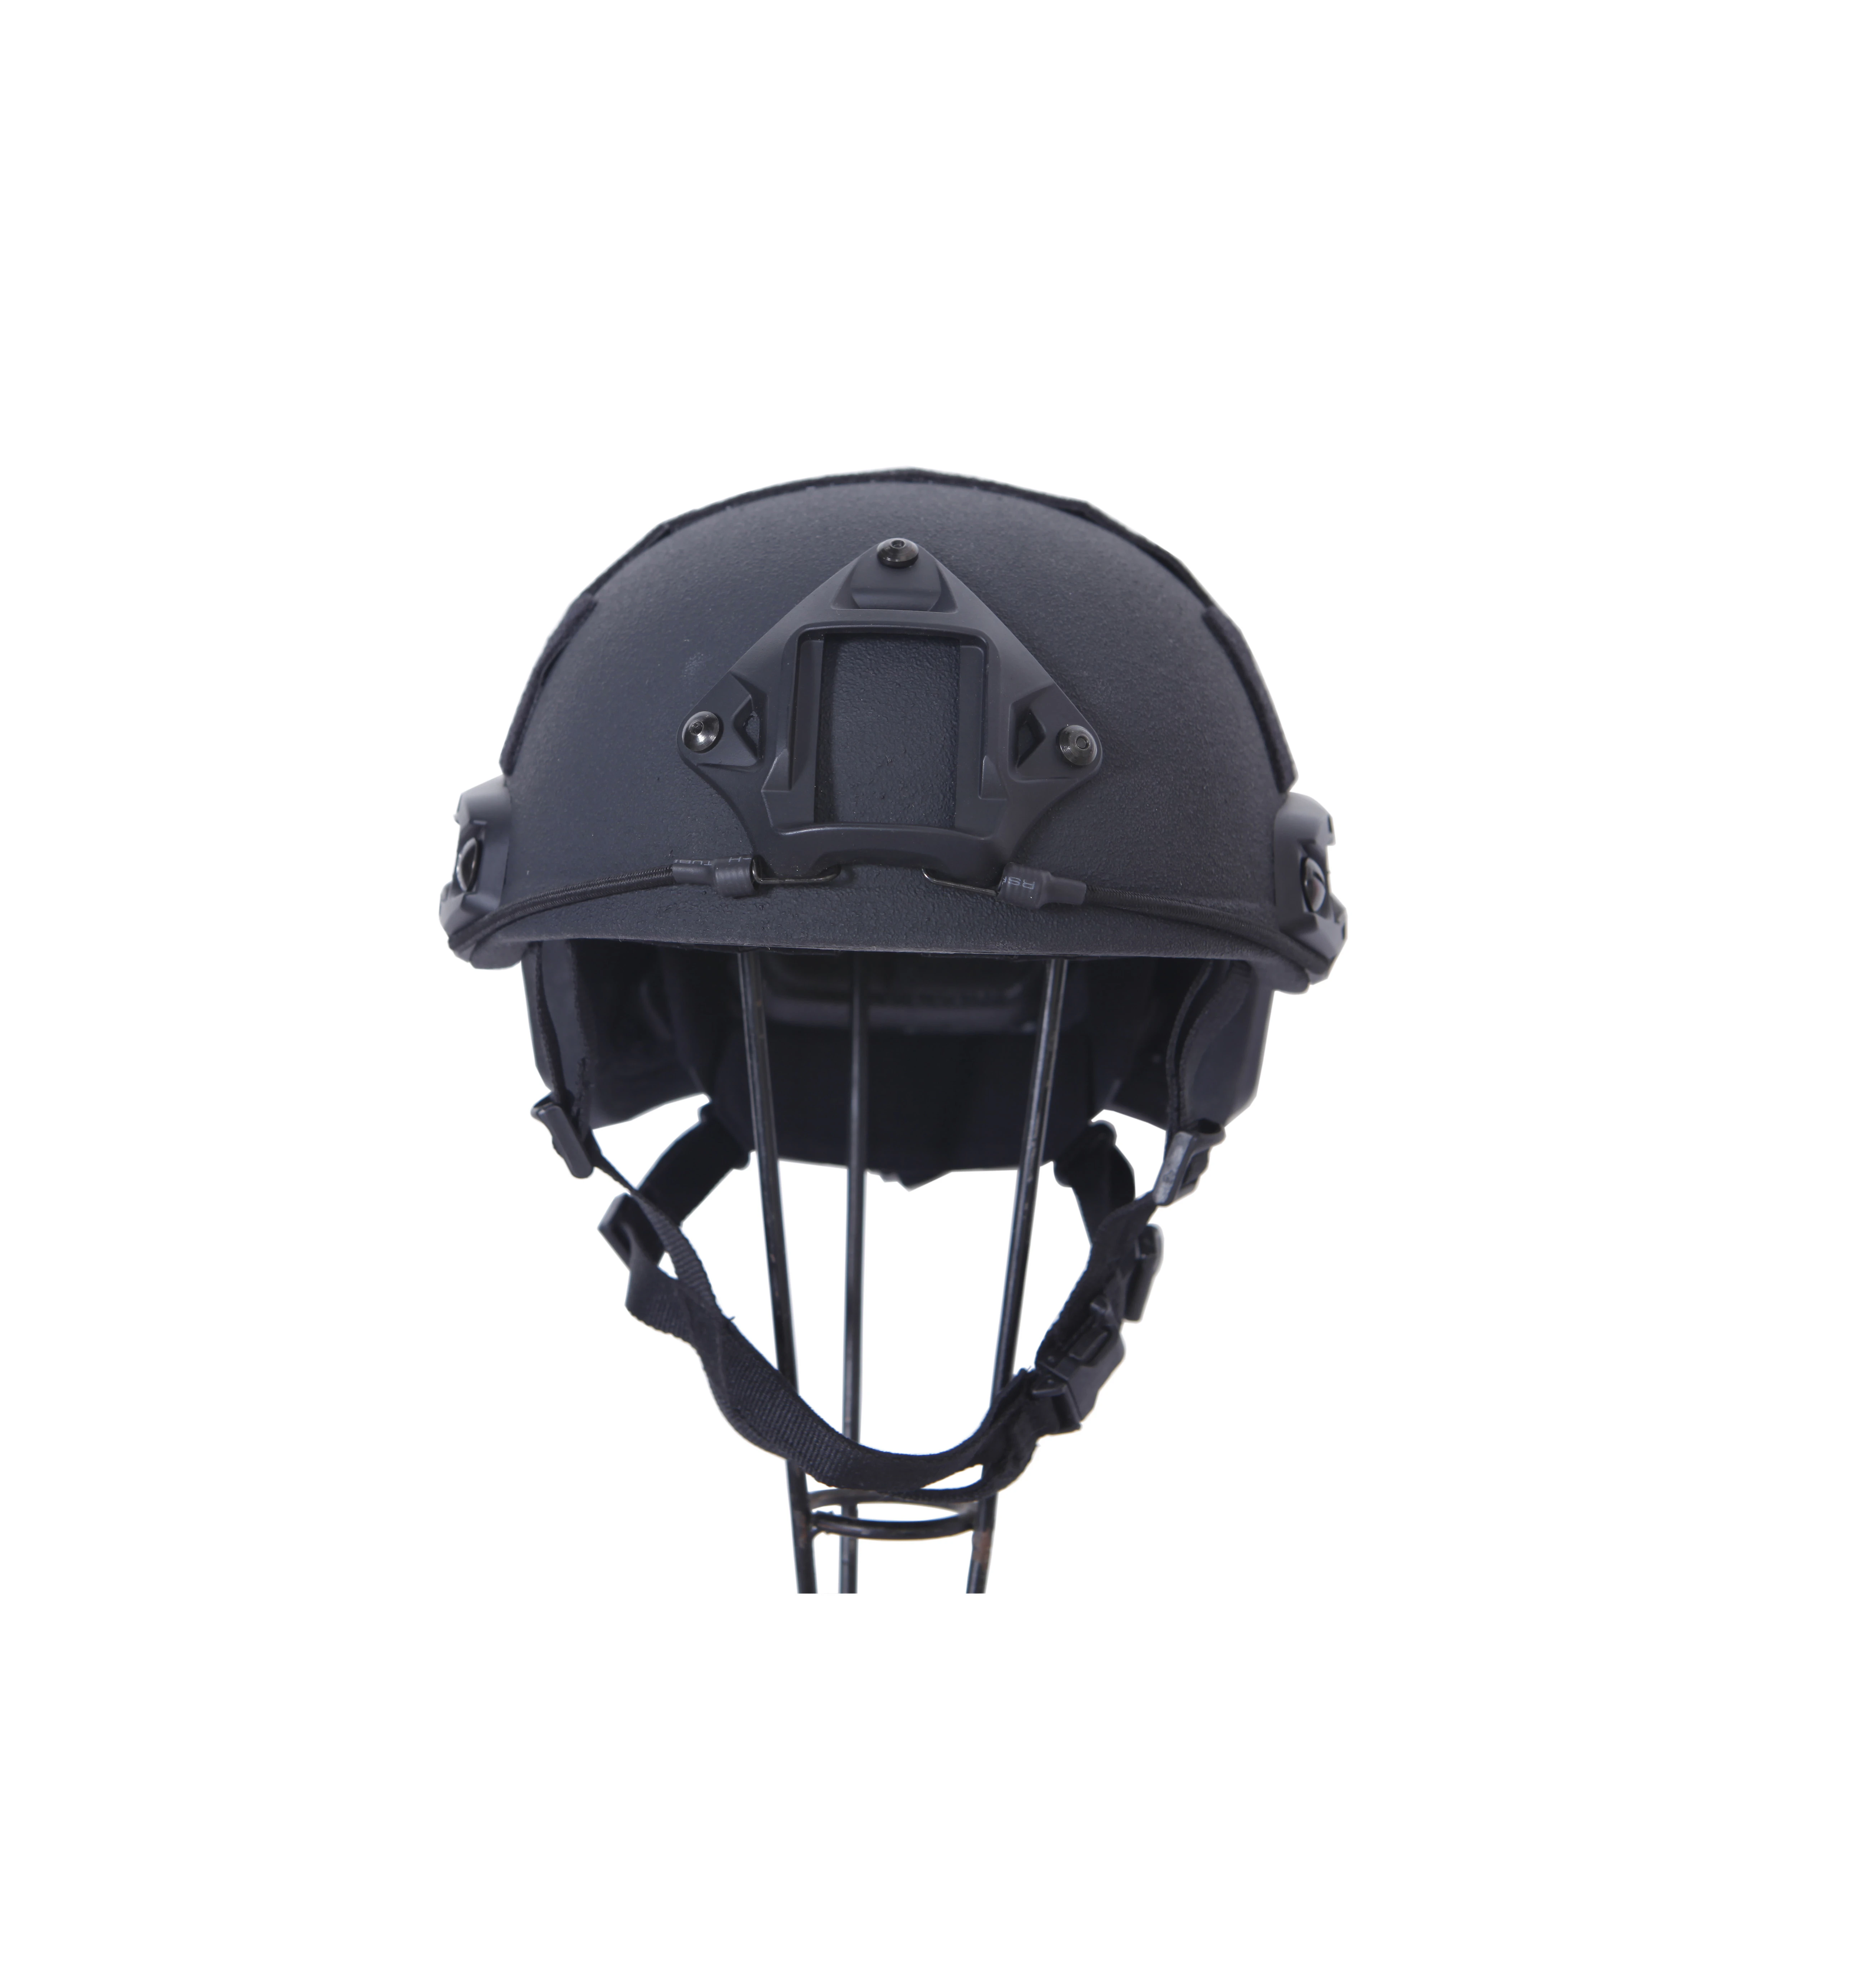 NIJ Standard Military FAST bulletproof helmet